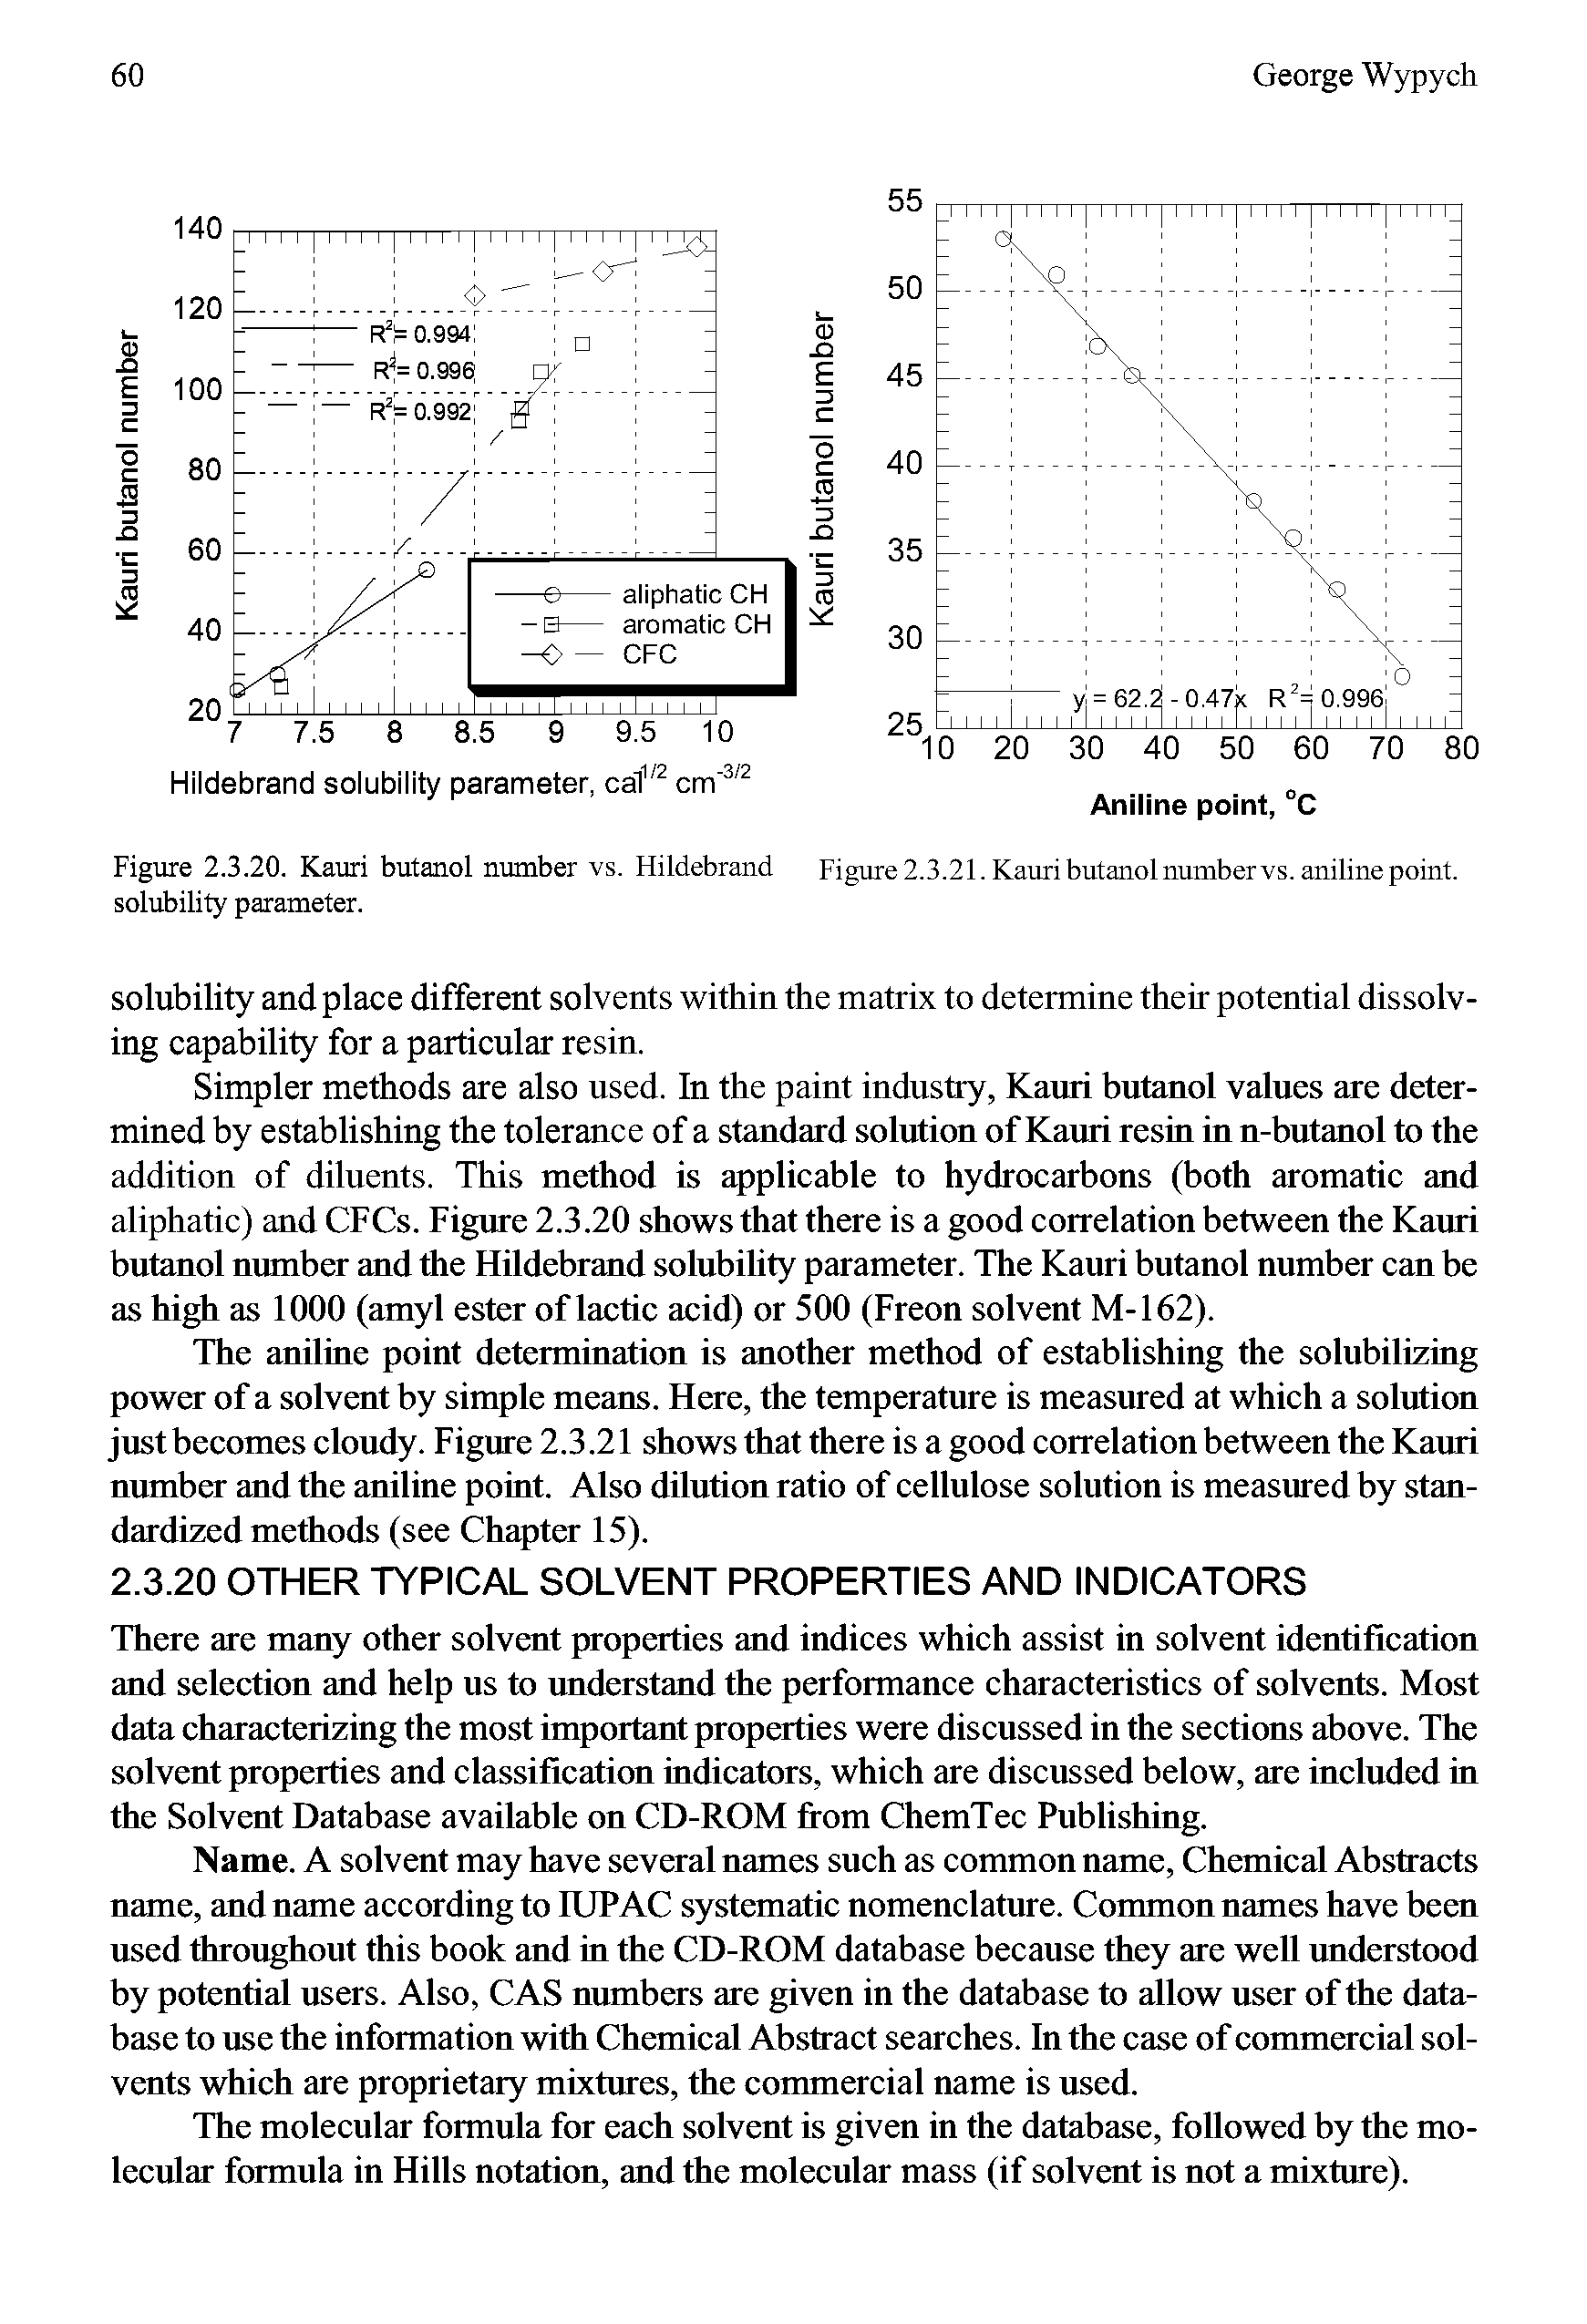 Figure 2.3.20. Kauri butanol number vs. Hildebrand solubility parameter.